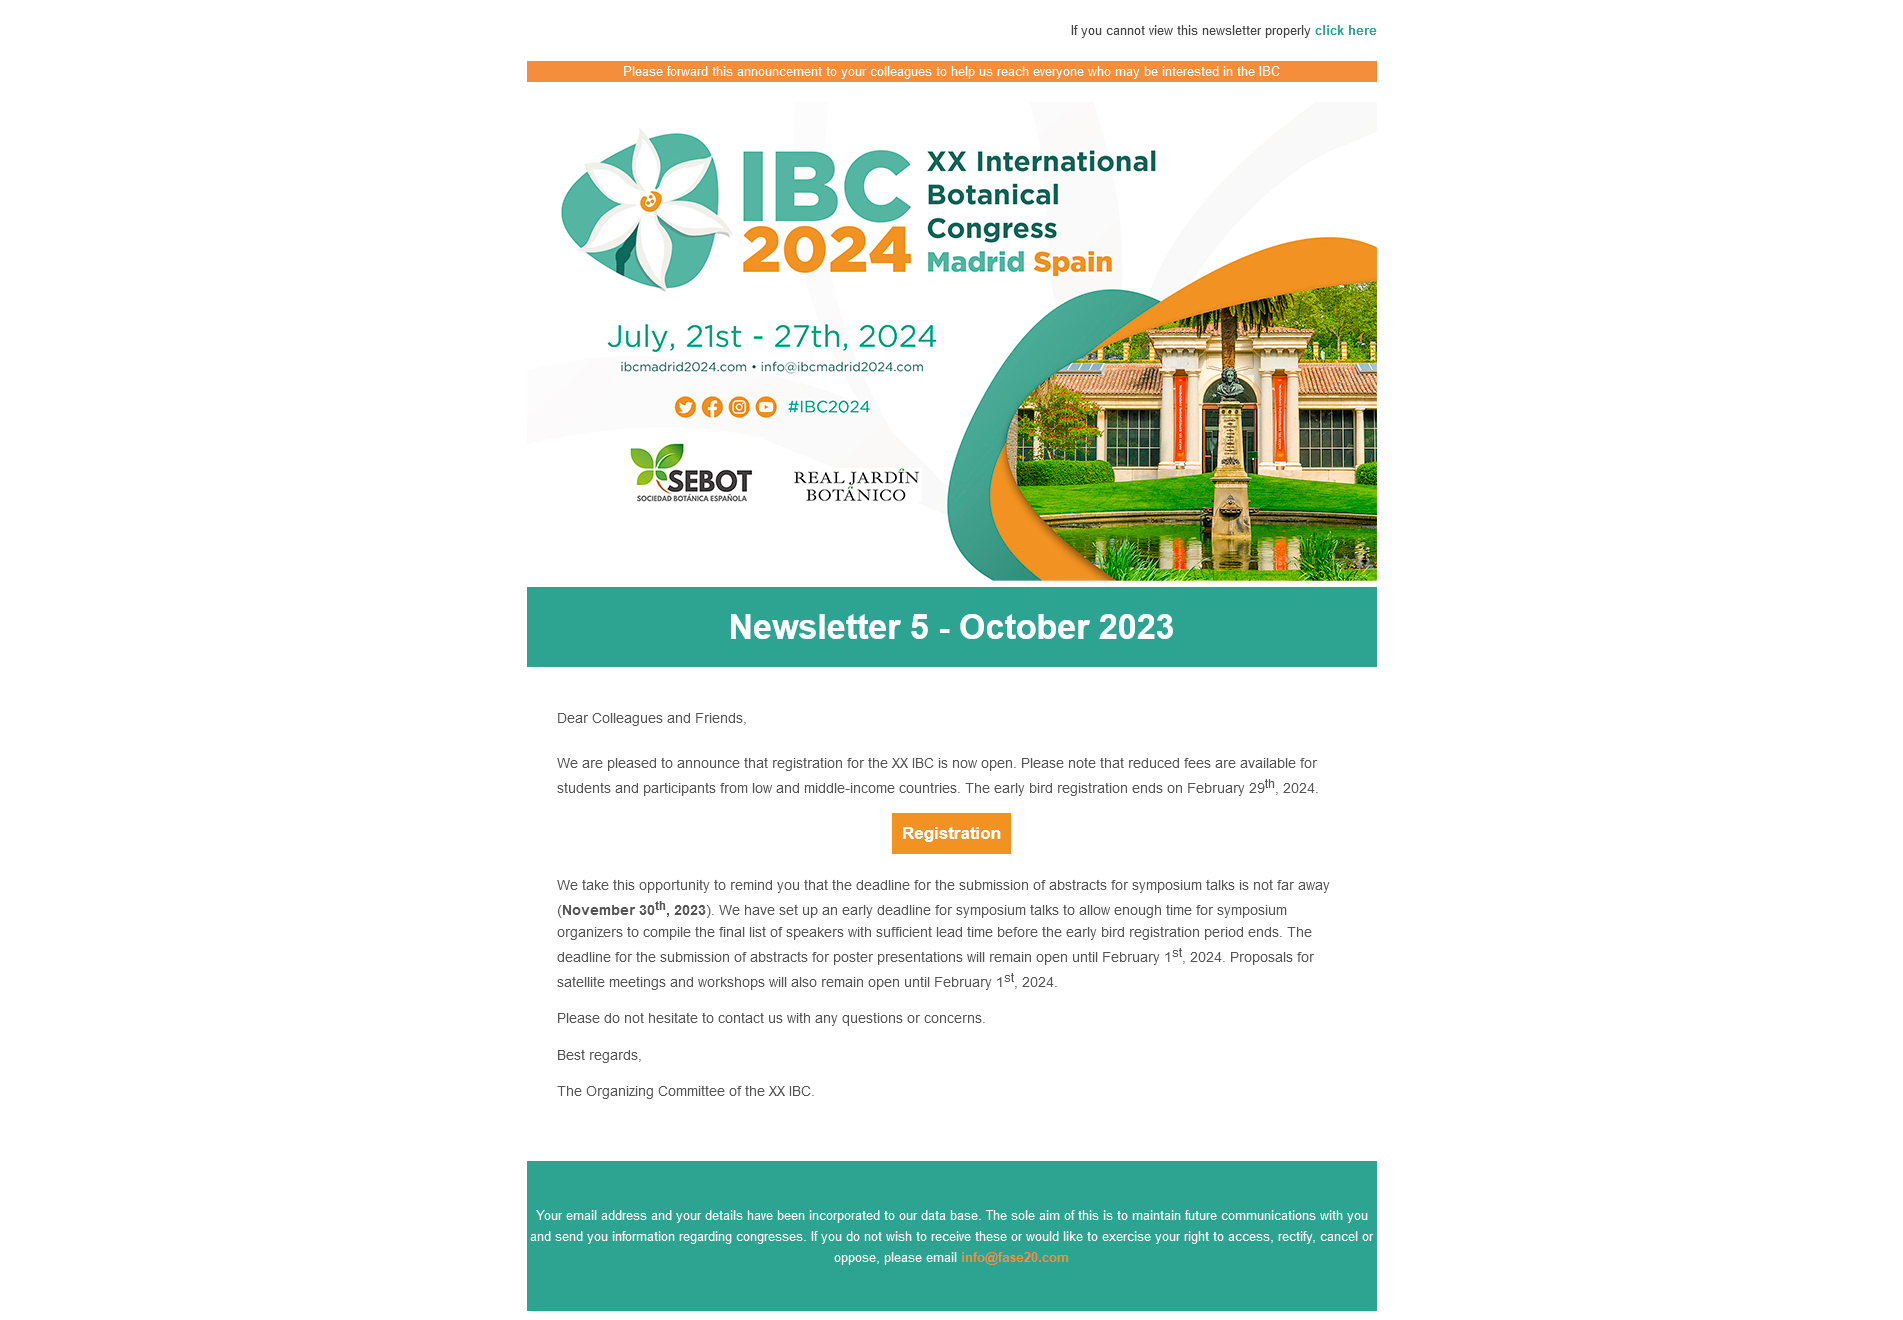 XX INTERNATIONAL BOTANICAL CONGRESS MADRID 2024 - Newsletter 5